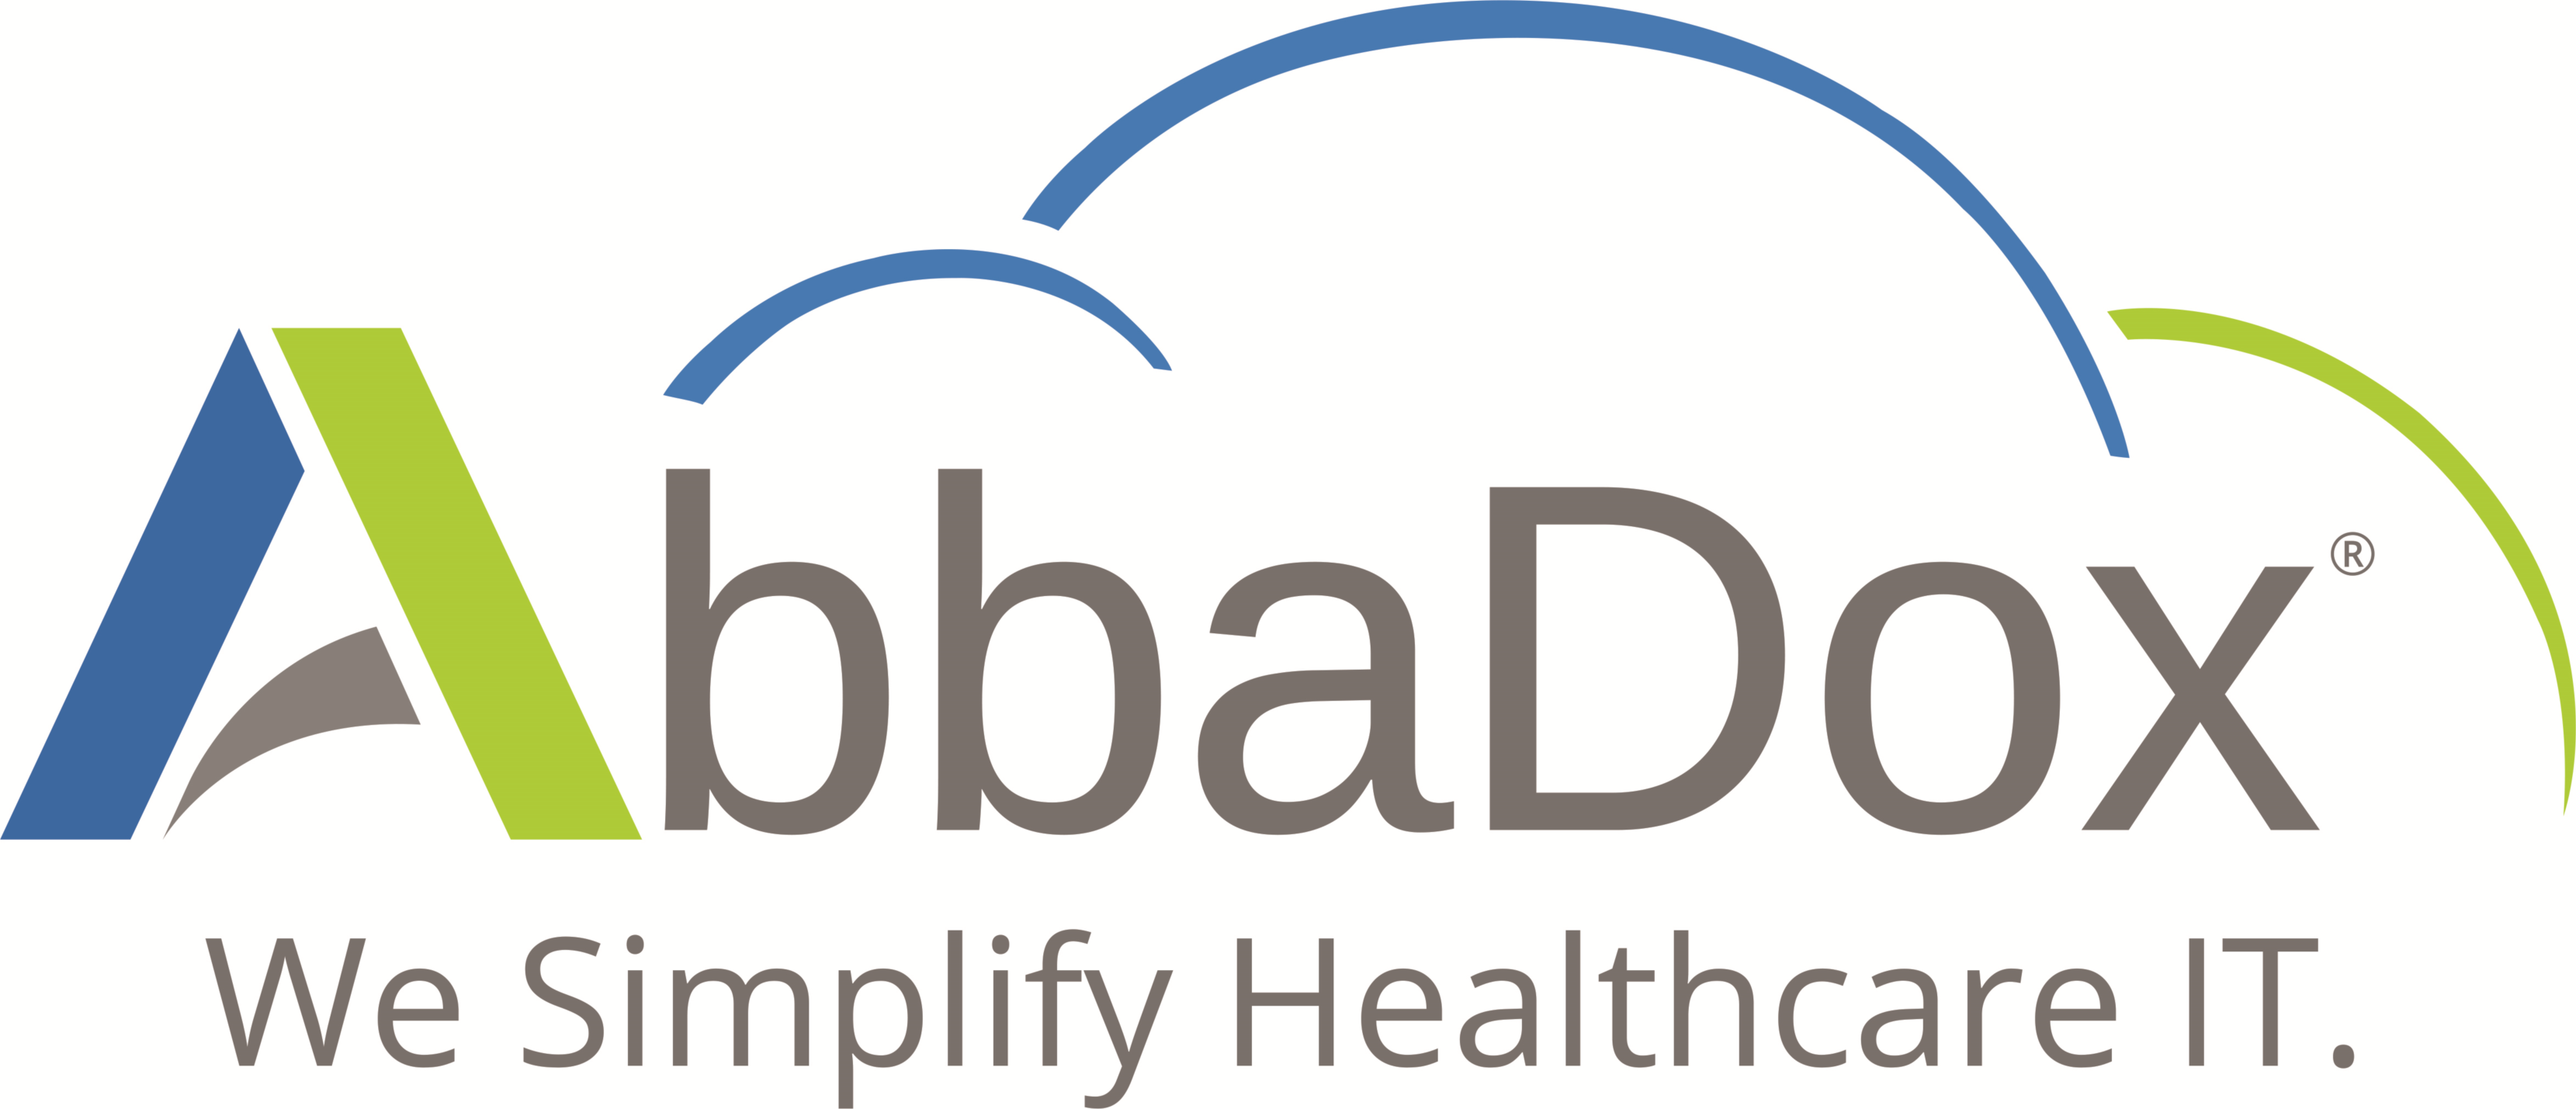 AbbaDox logo